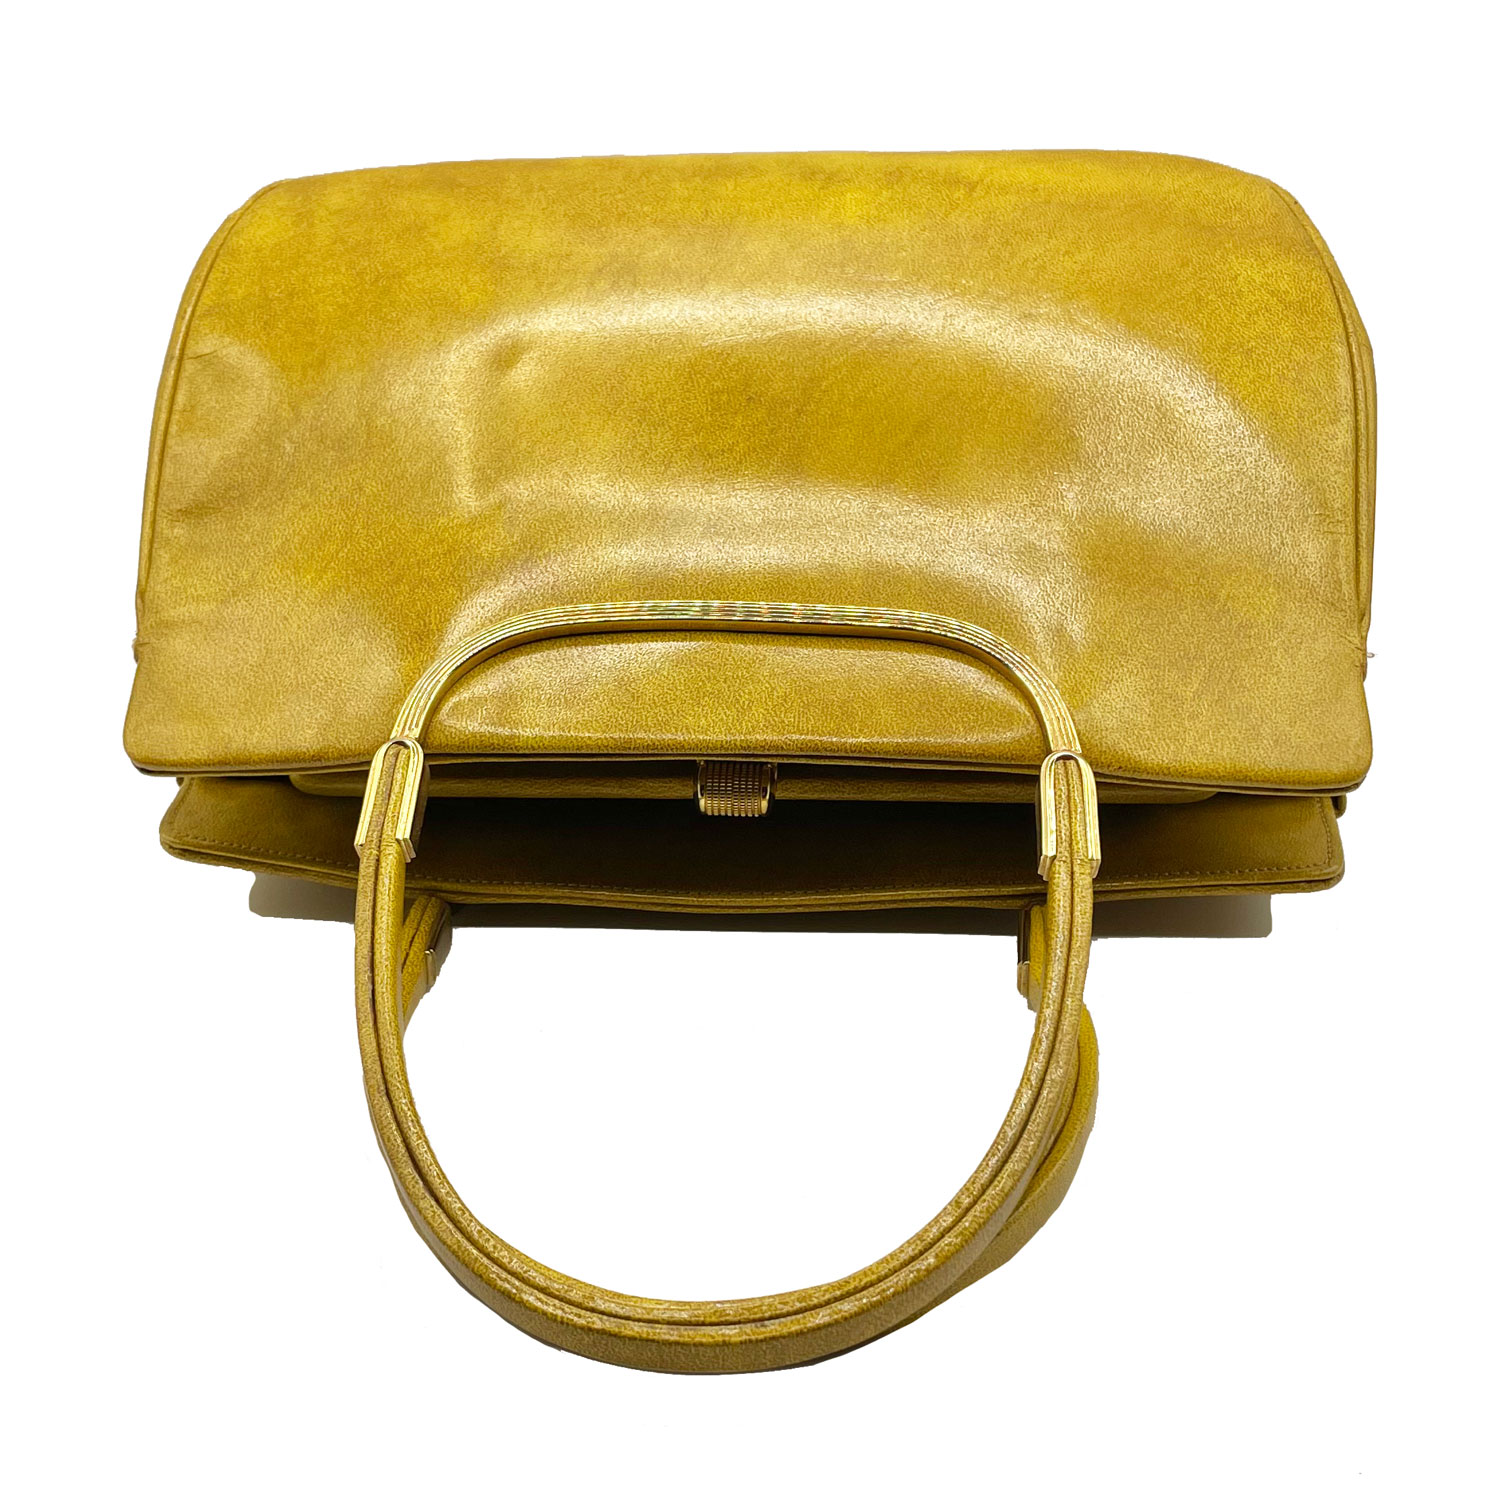 1960s top handle purse